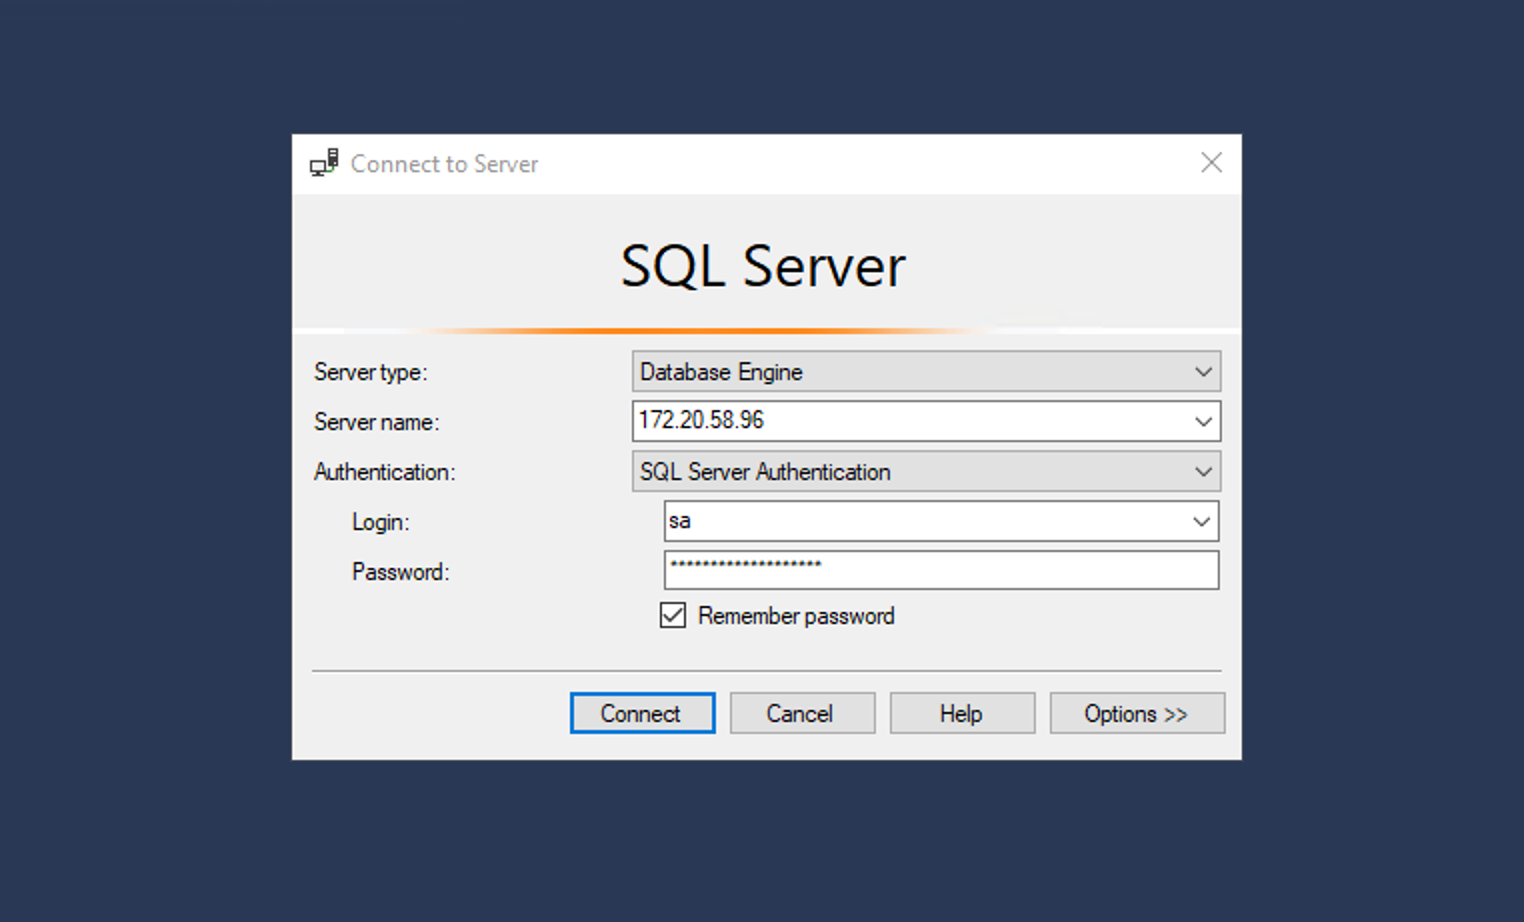 Logging Into SQL Server